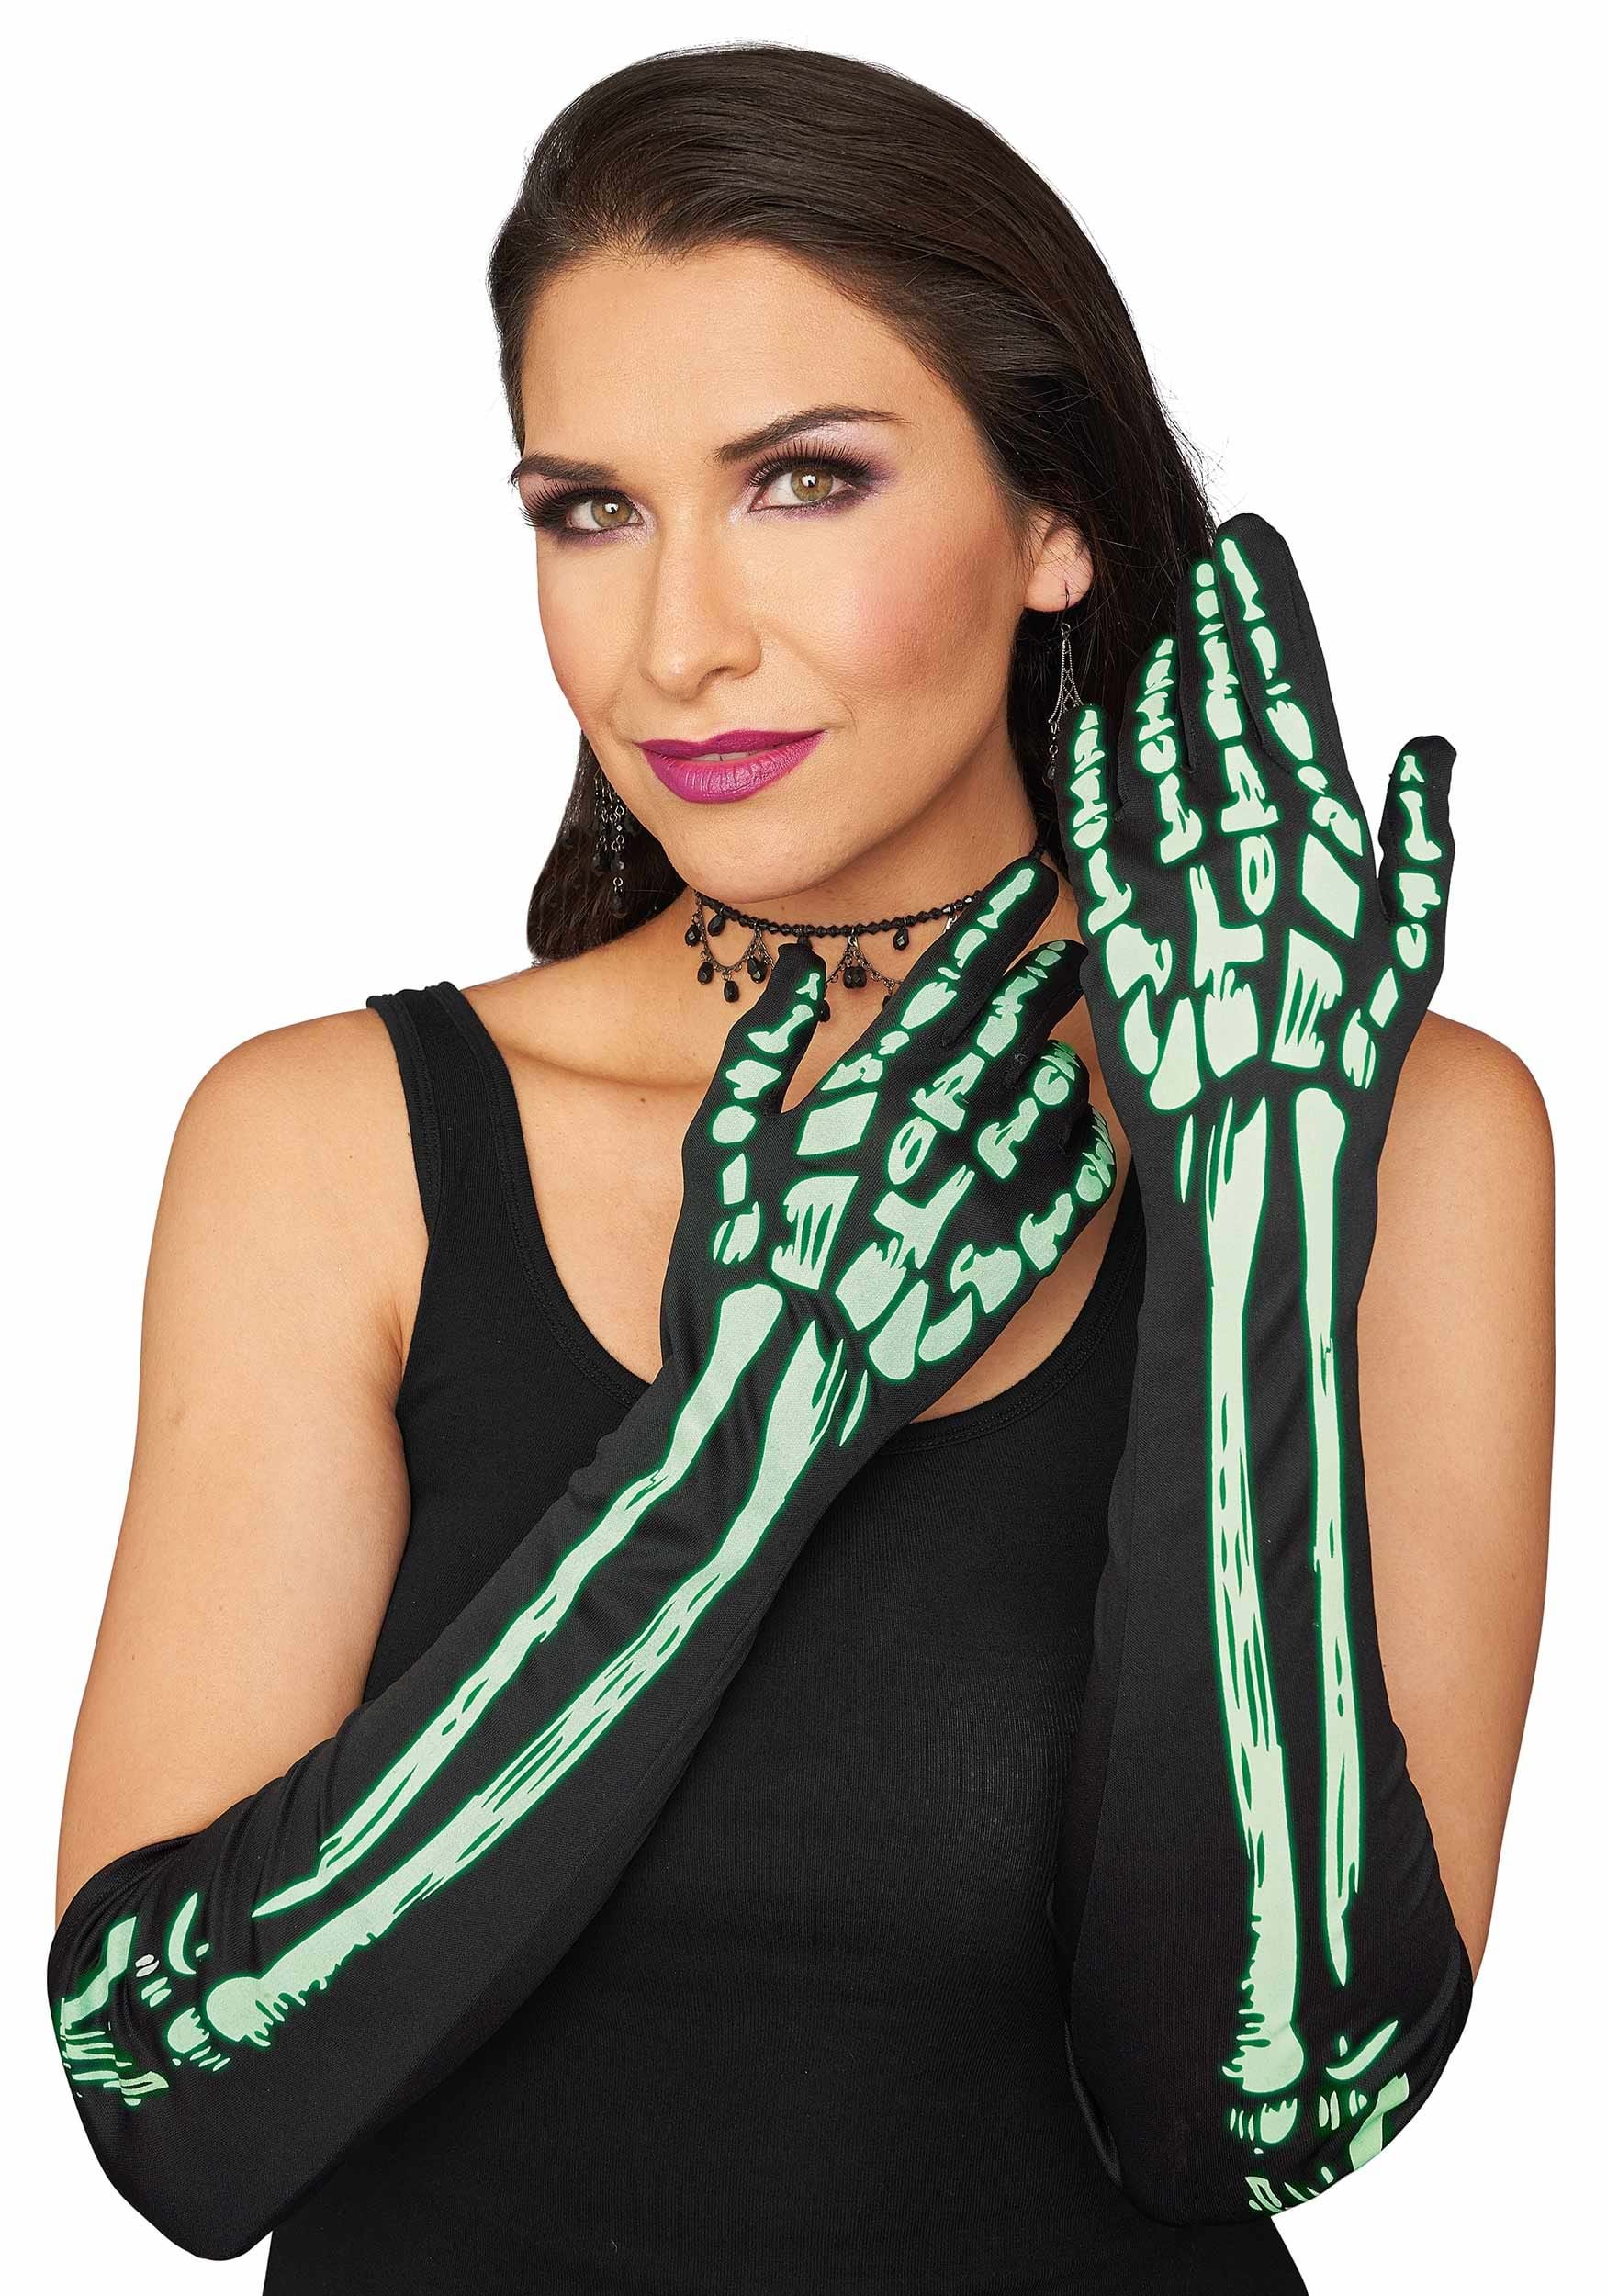 Adult Glow in the Dark Skeleton Gloves | Costume Gloves